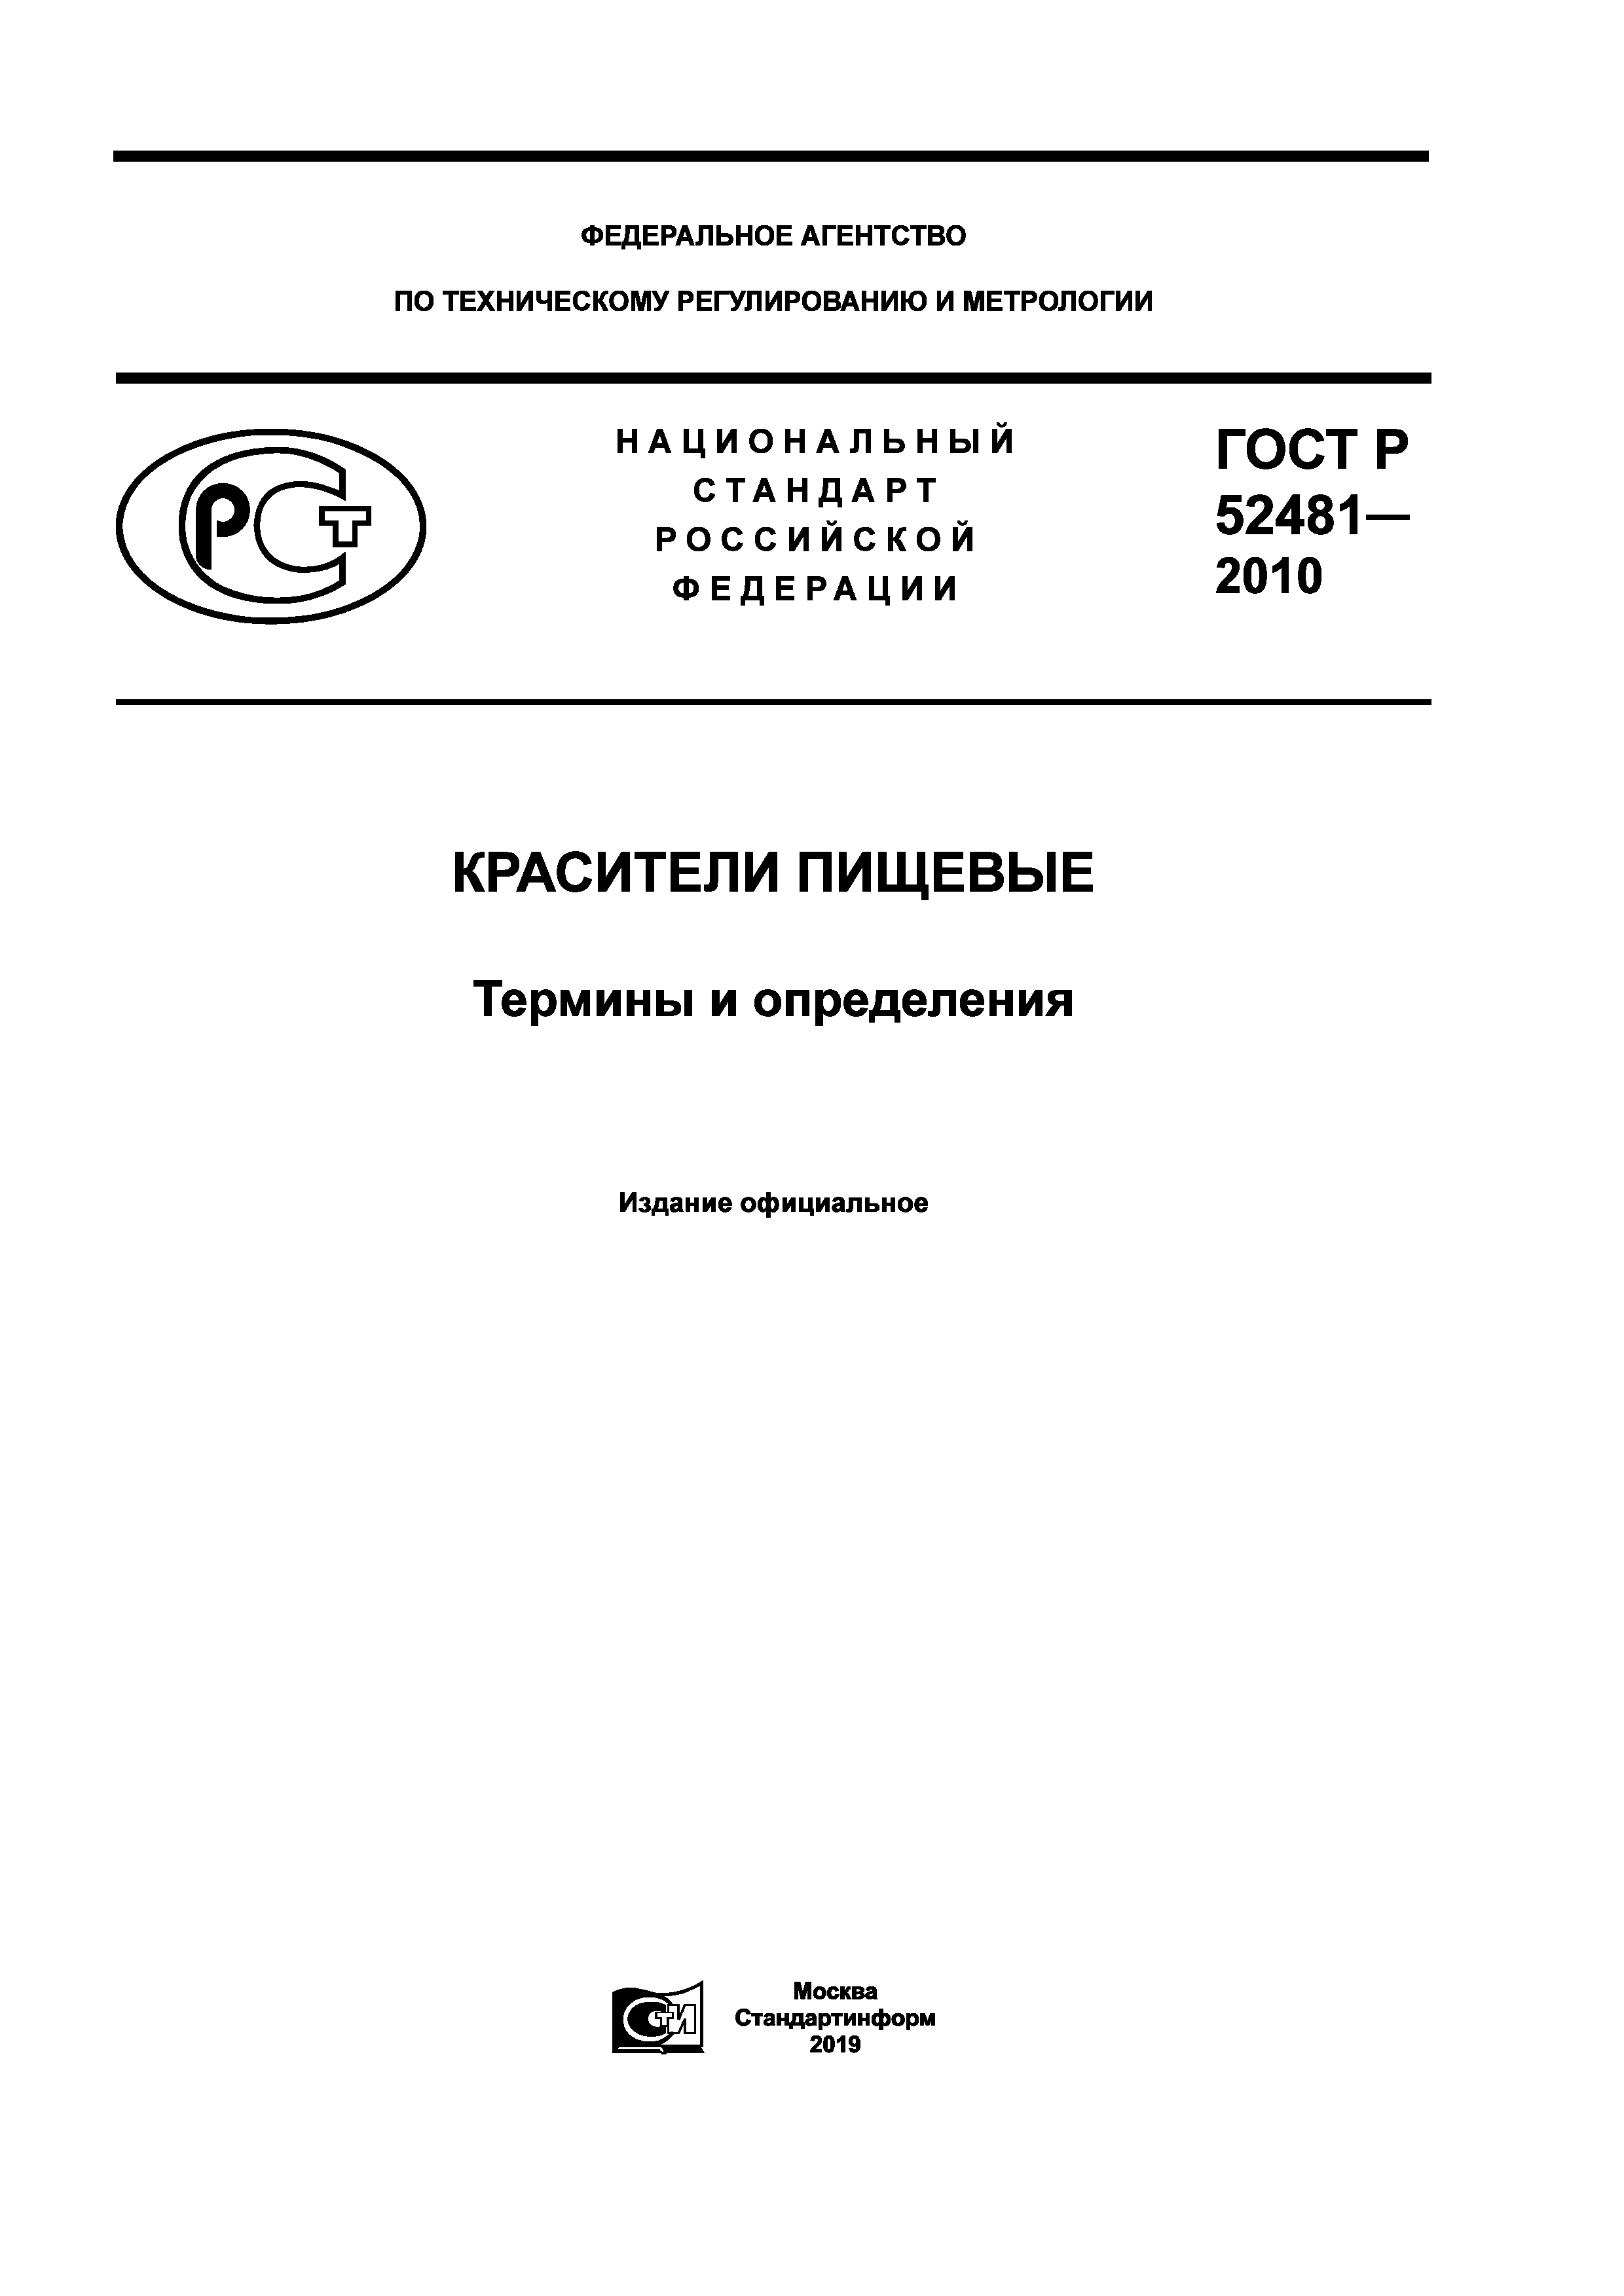 ГОСТ Р 52481-2010